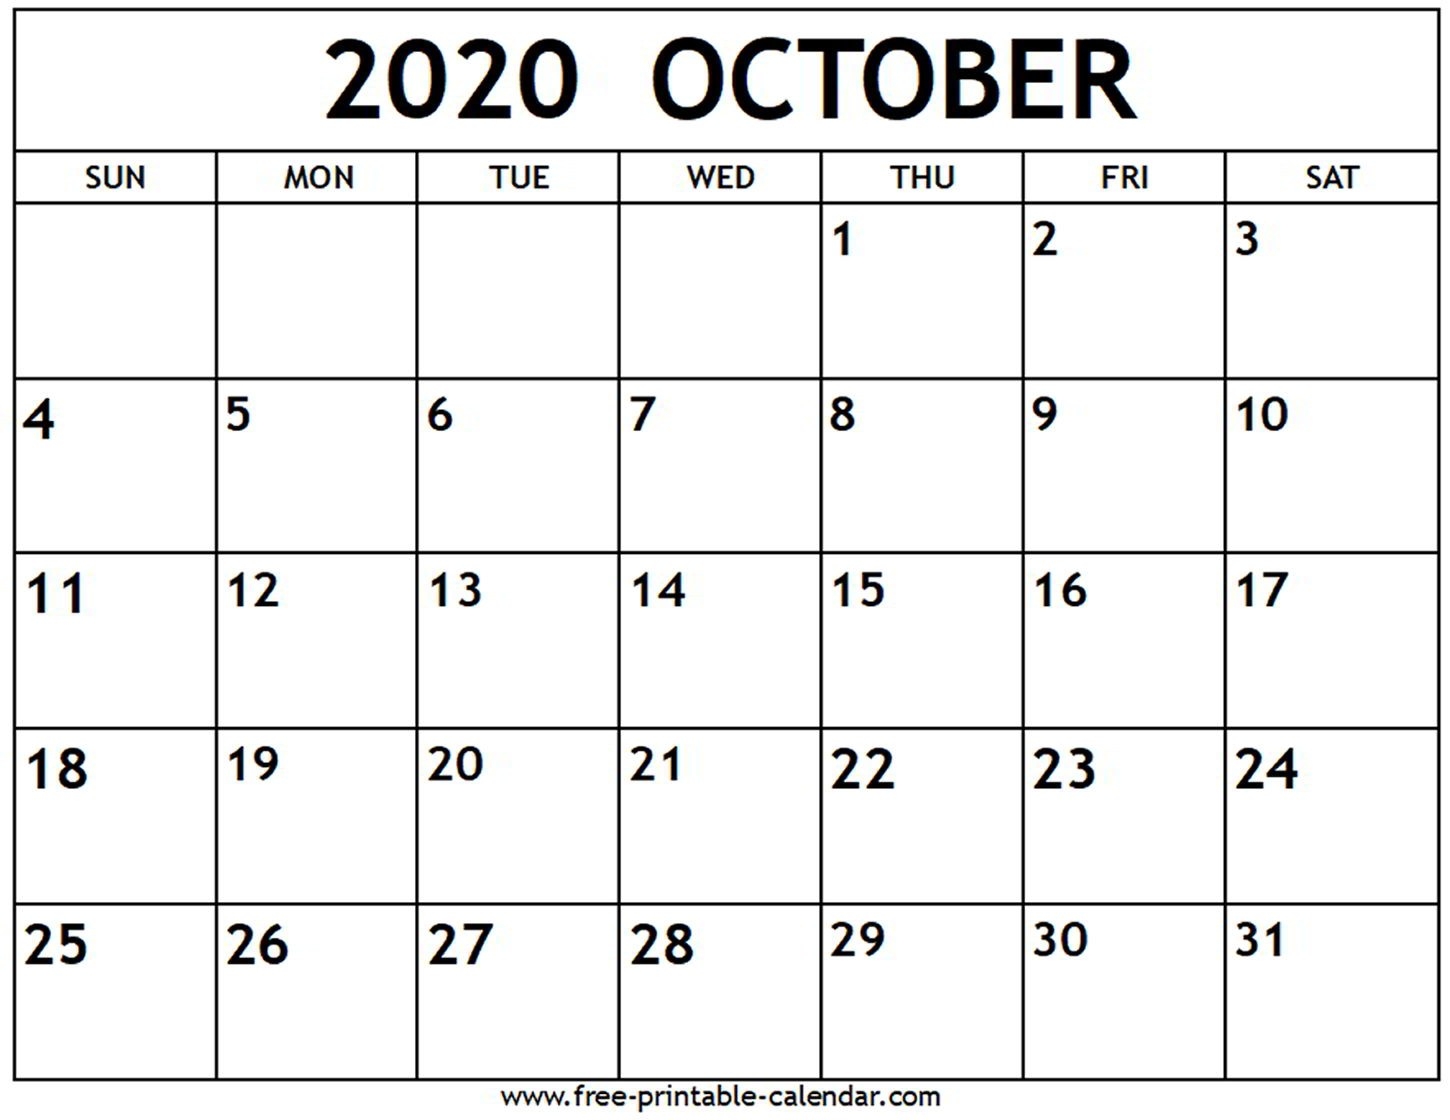 2020 Calendar October-Free Printable Blank October 2020 Calendar Jewish Holidays